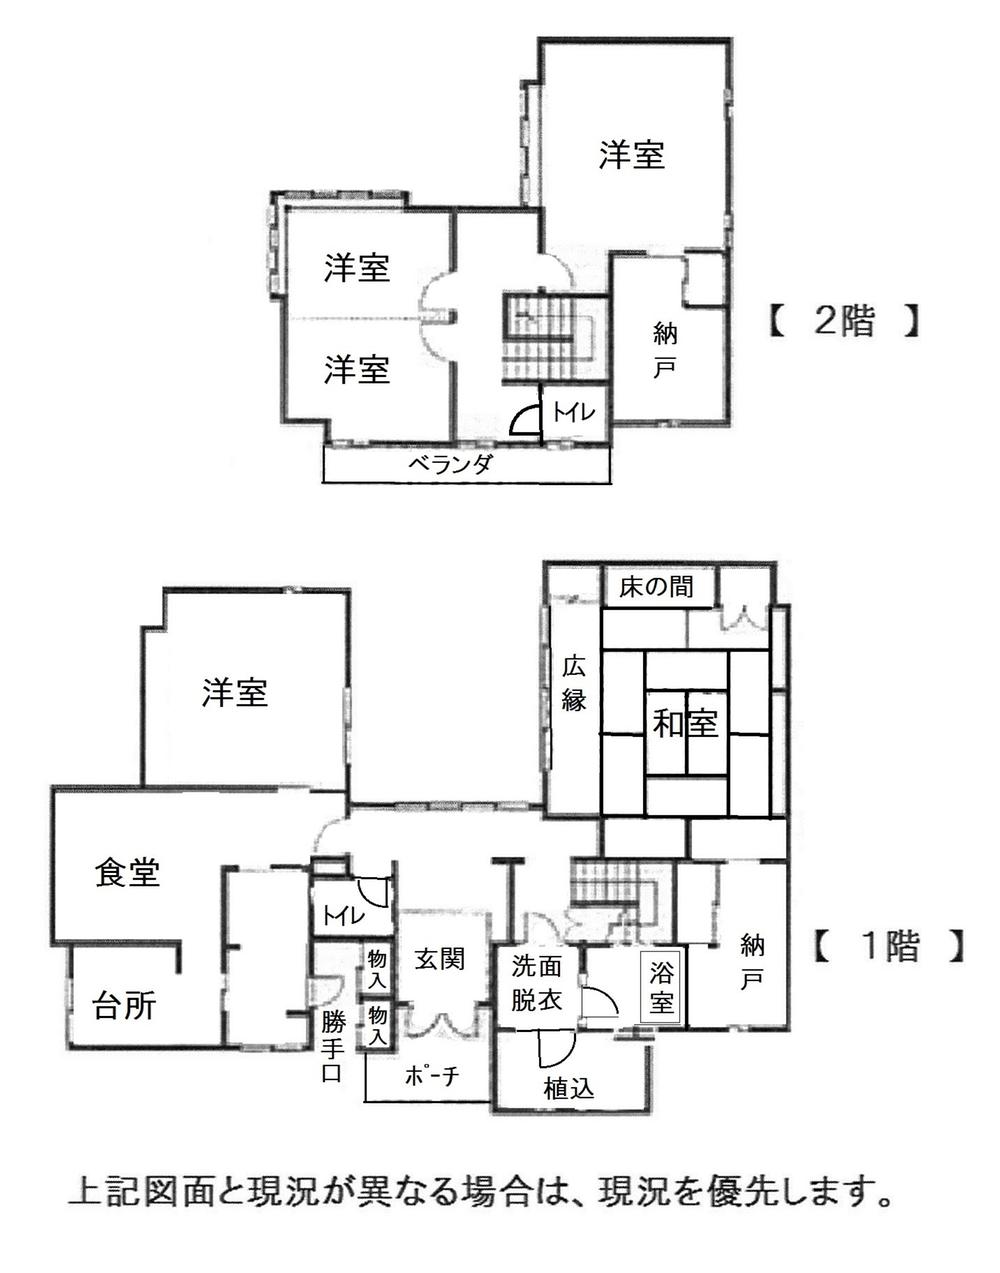 Floor plan. 35 million yen, 4LDK + 2S (storeroom), Land area 610 sq m , Building area 193.96 sq m